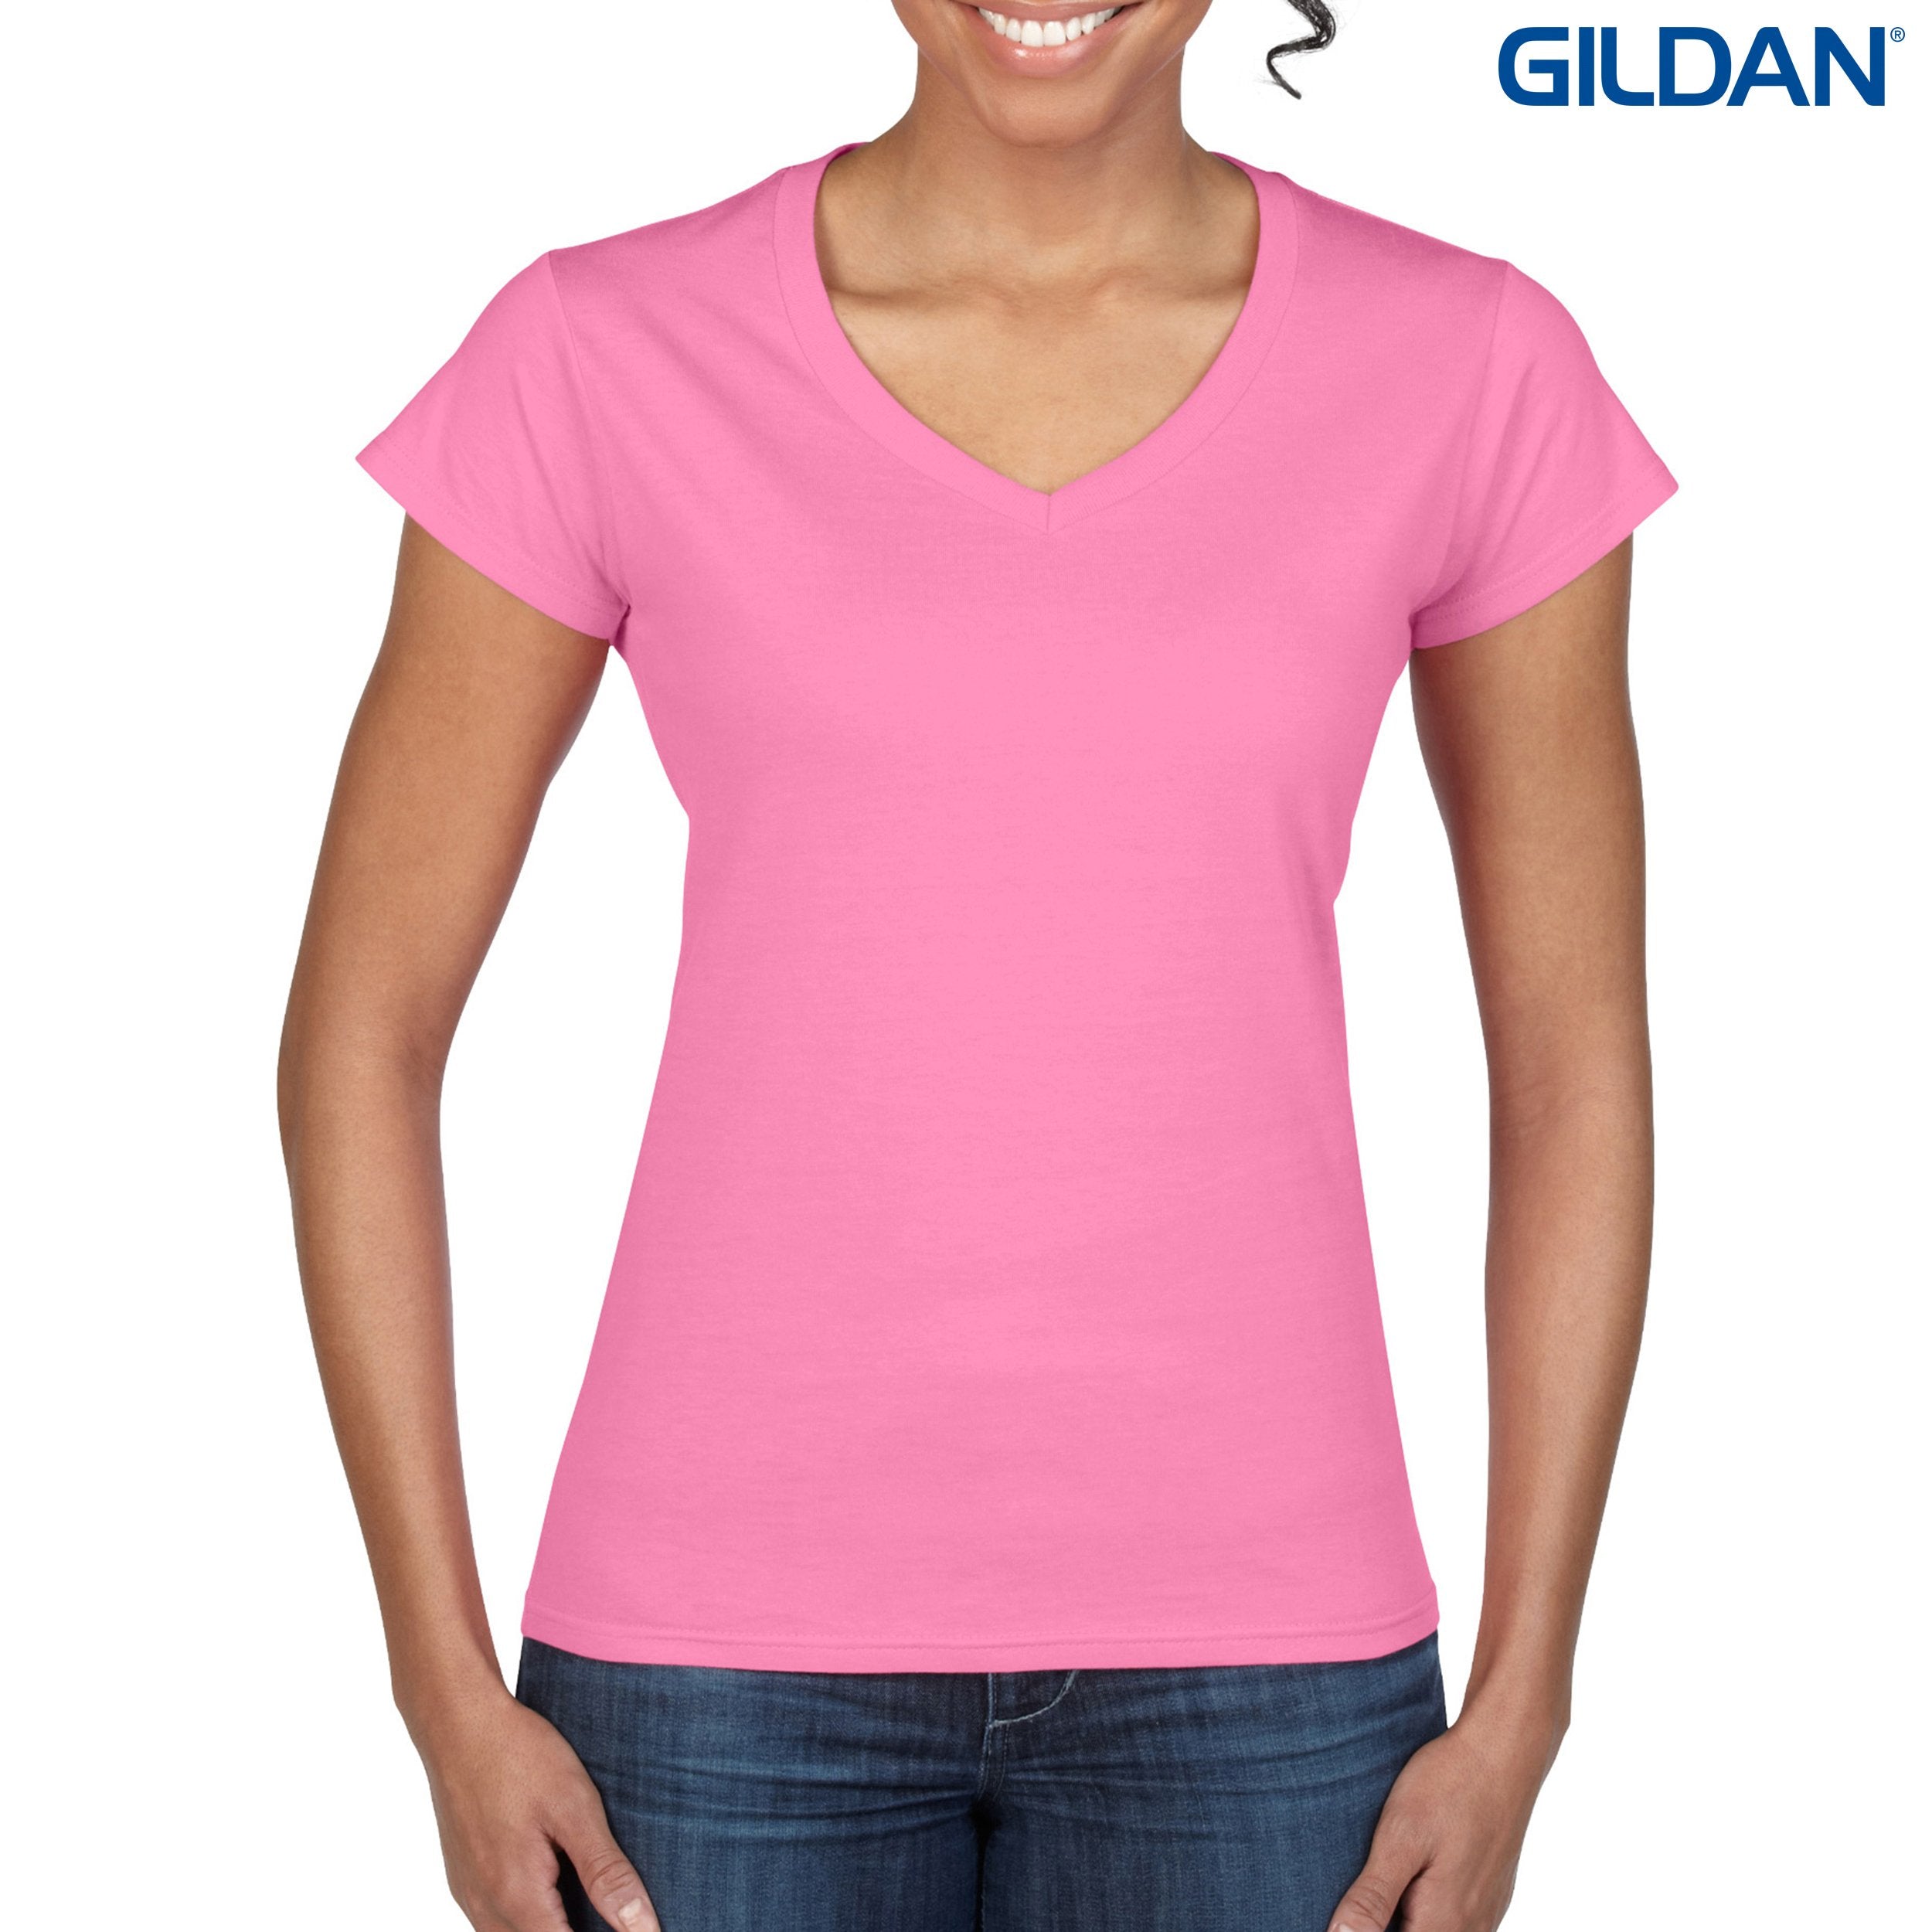 64V00L Gildan Softstyle Ladies’ V-Neck T-Shirt